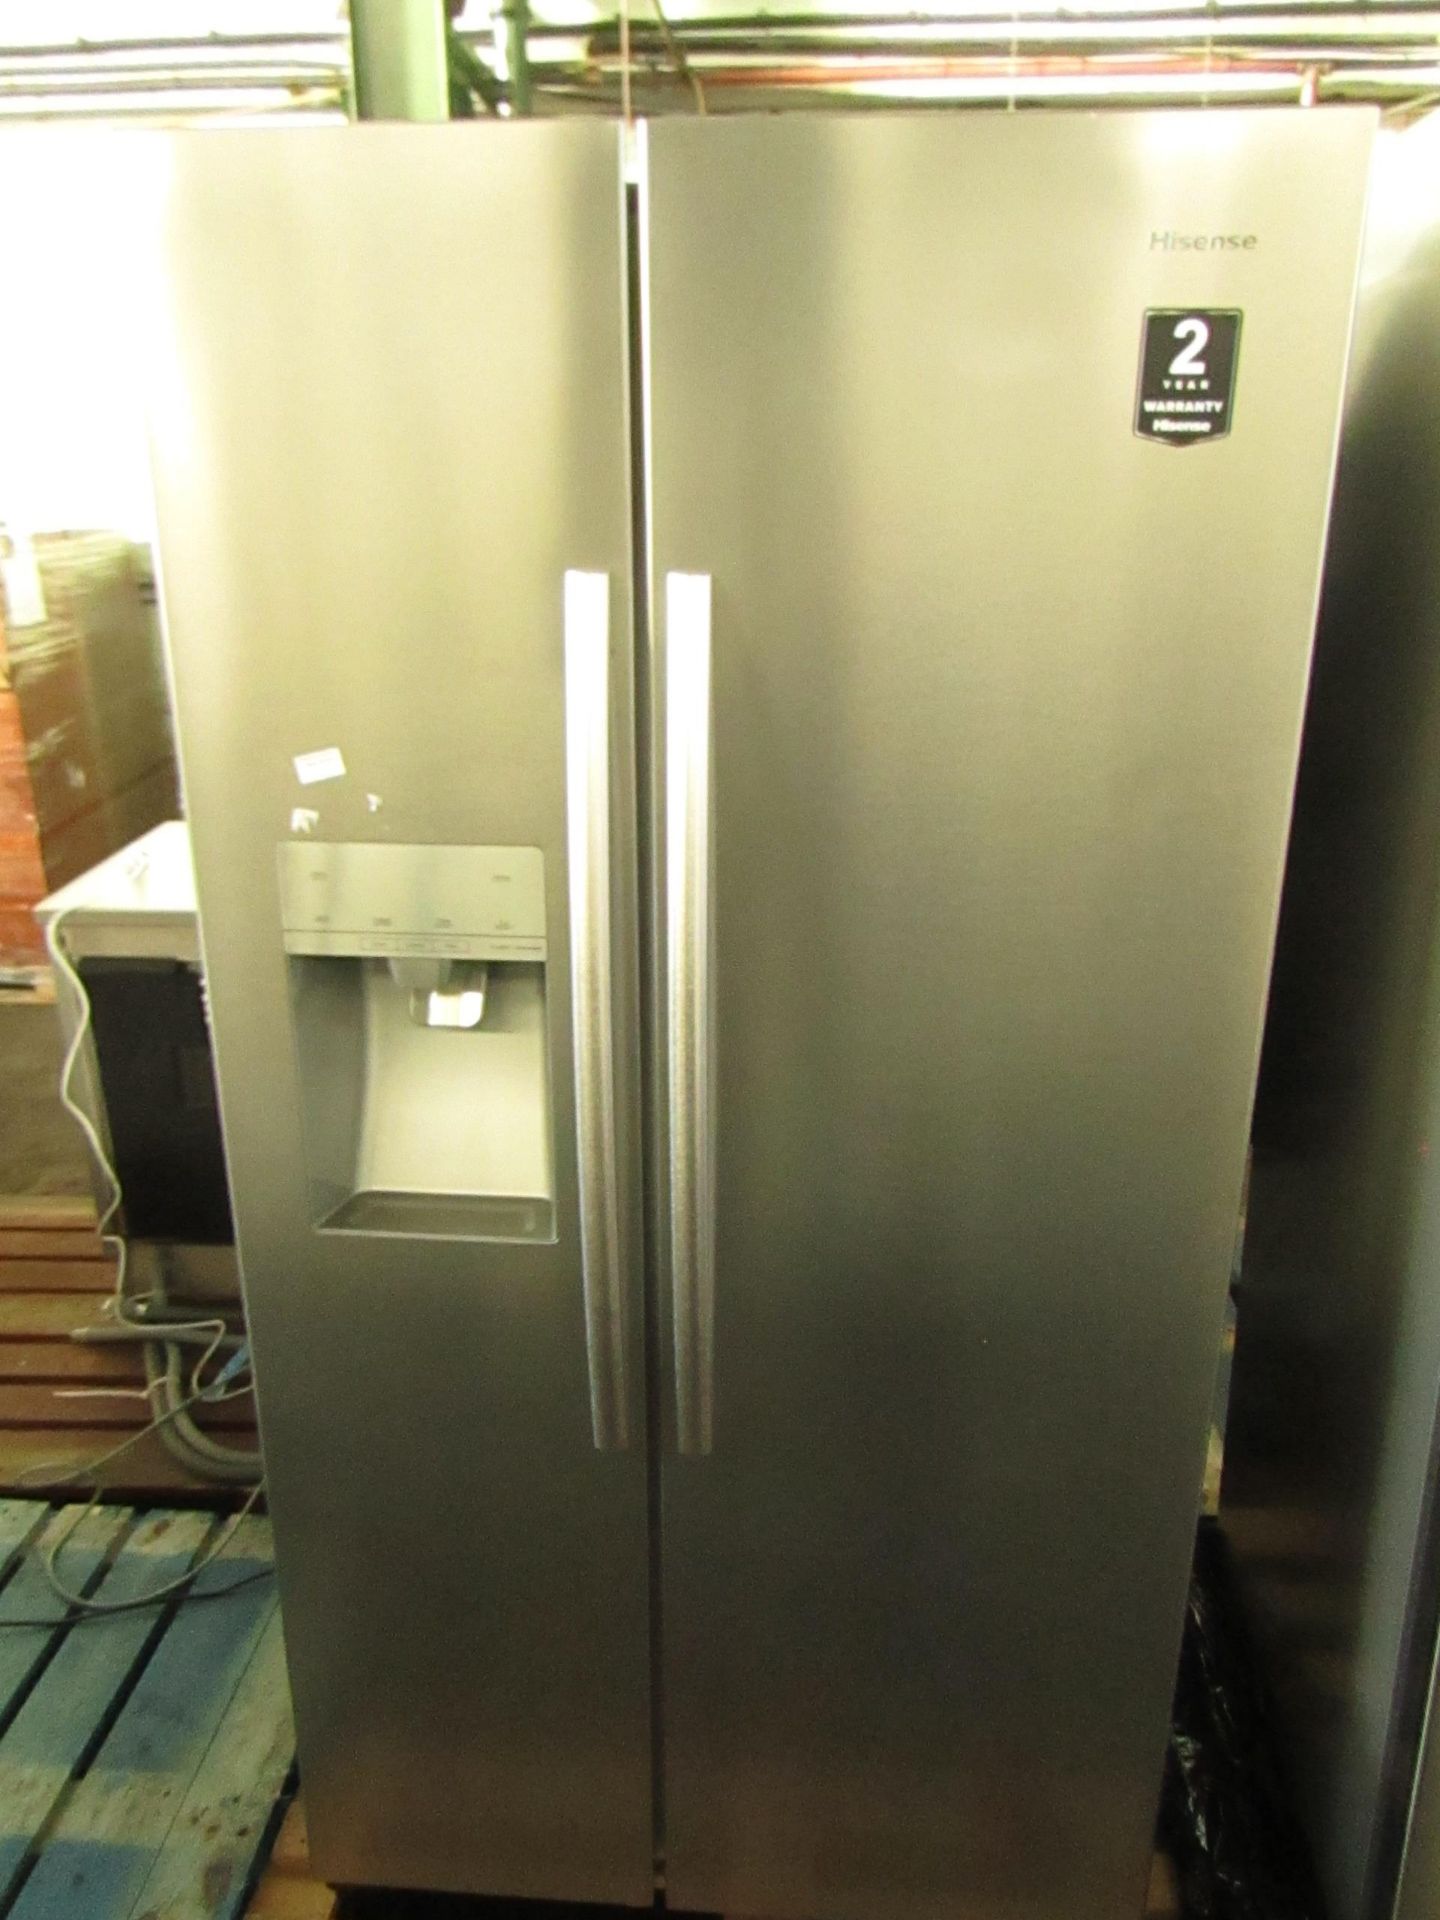 Hisence Fridge Freezer. RS694N41. Tested Working, a few small dents on the fridge door. RRP œ749